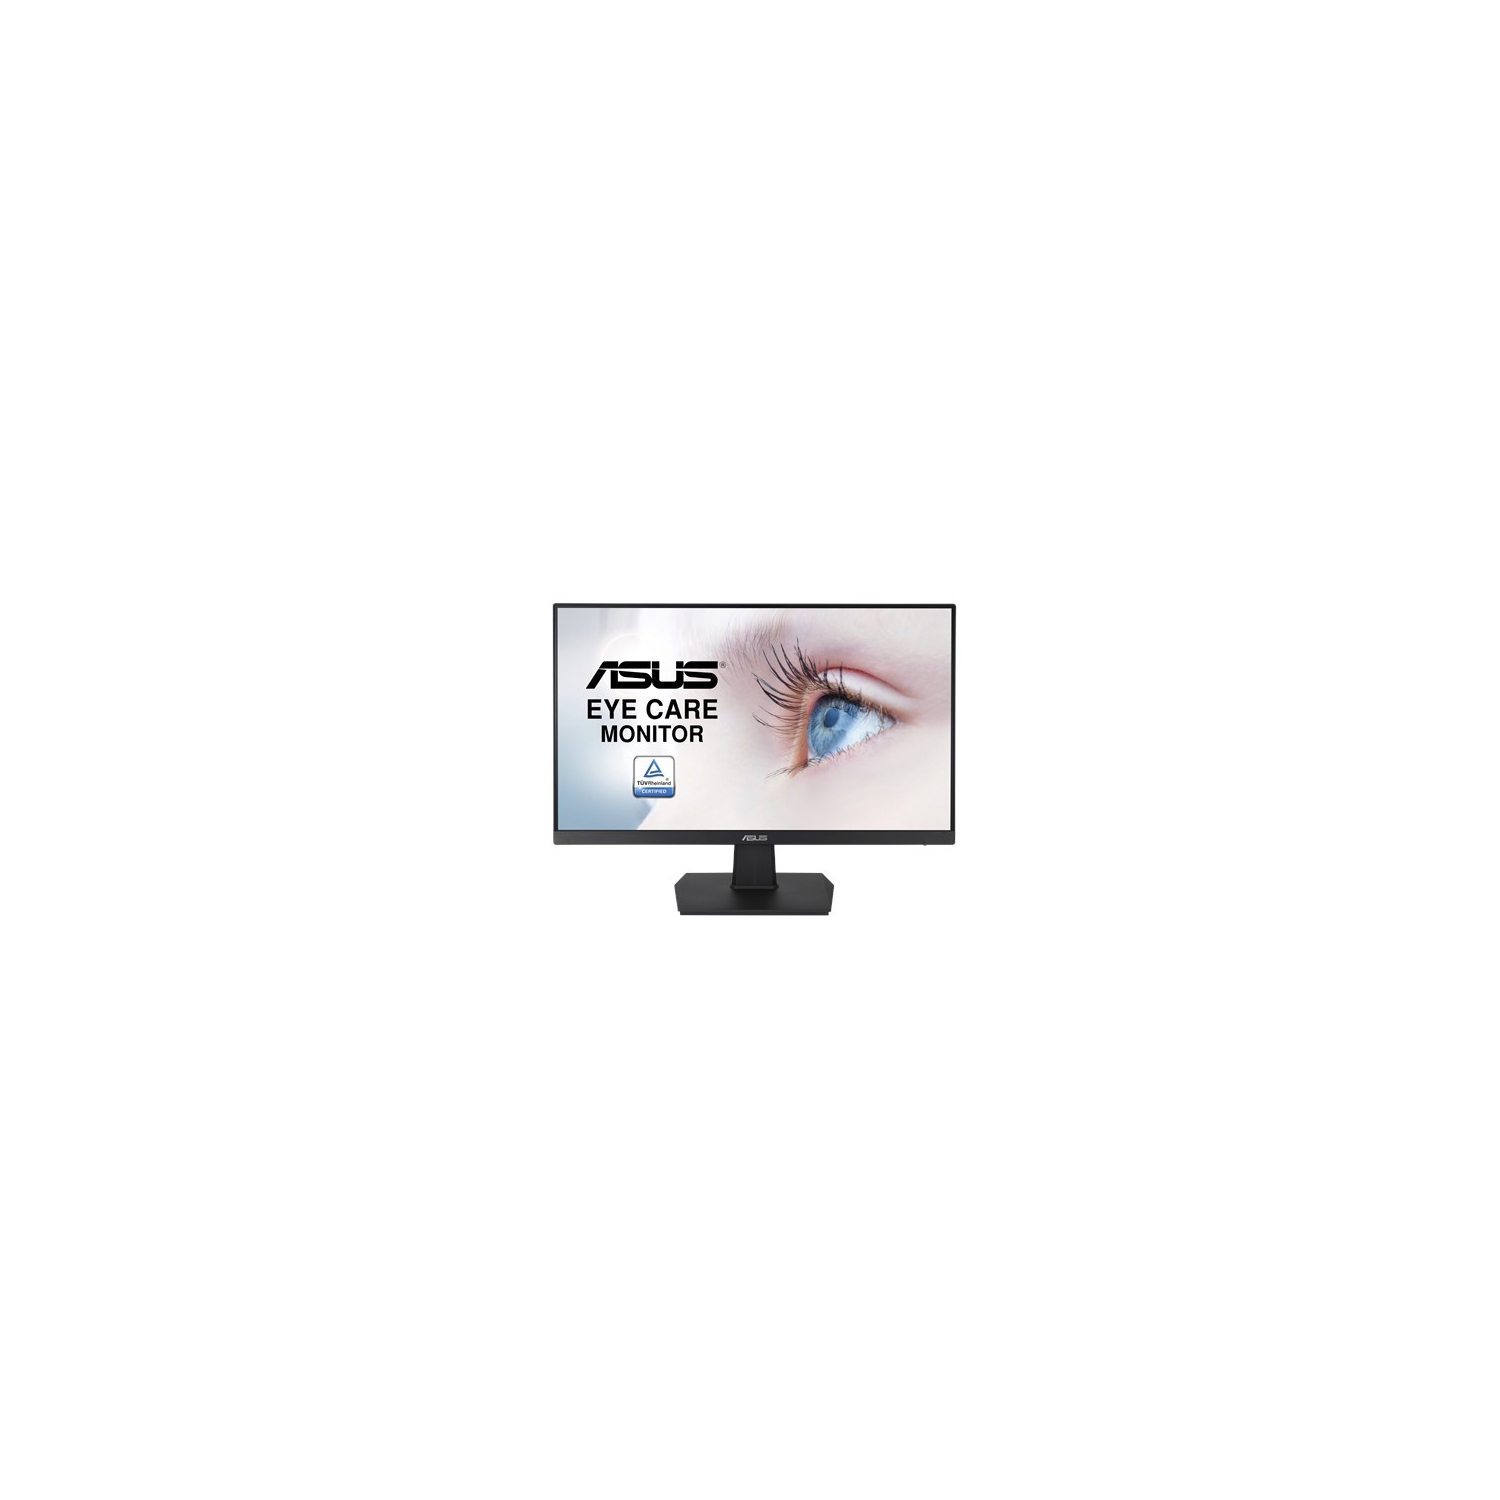 Asus 27" FHD 75Hz 5ms GTG IPS LCD Monitor (VA27EHE) - Black